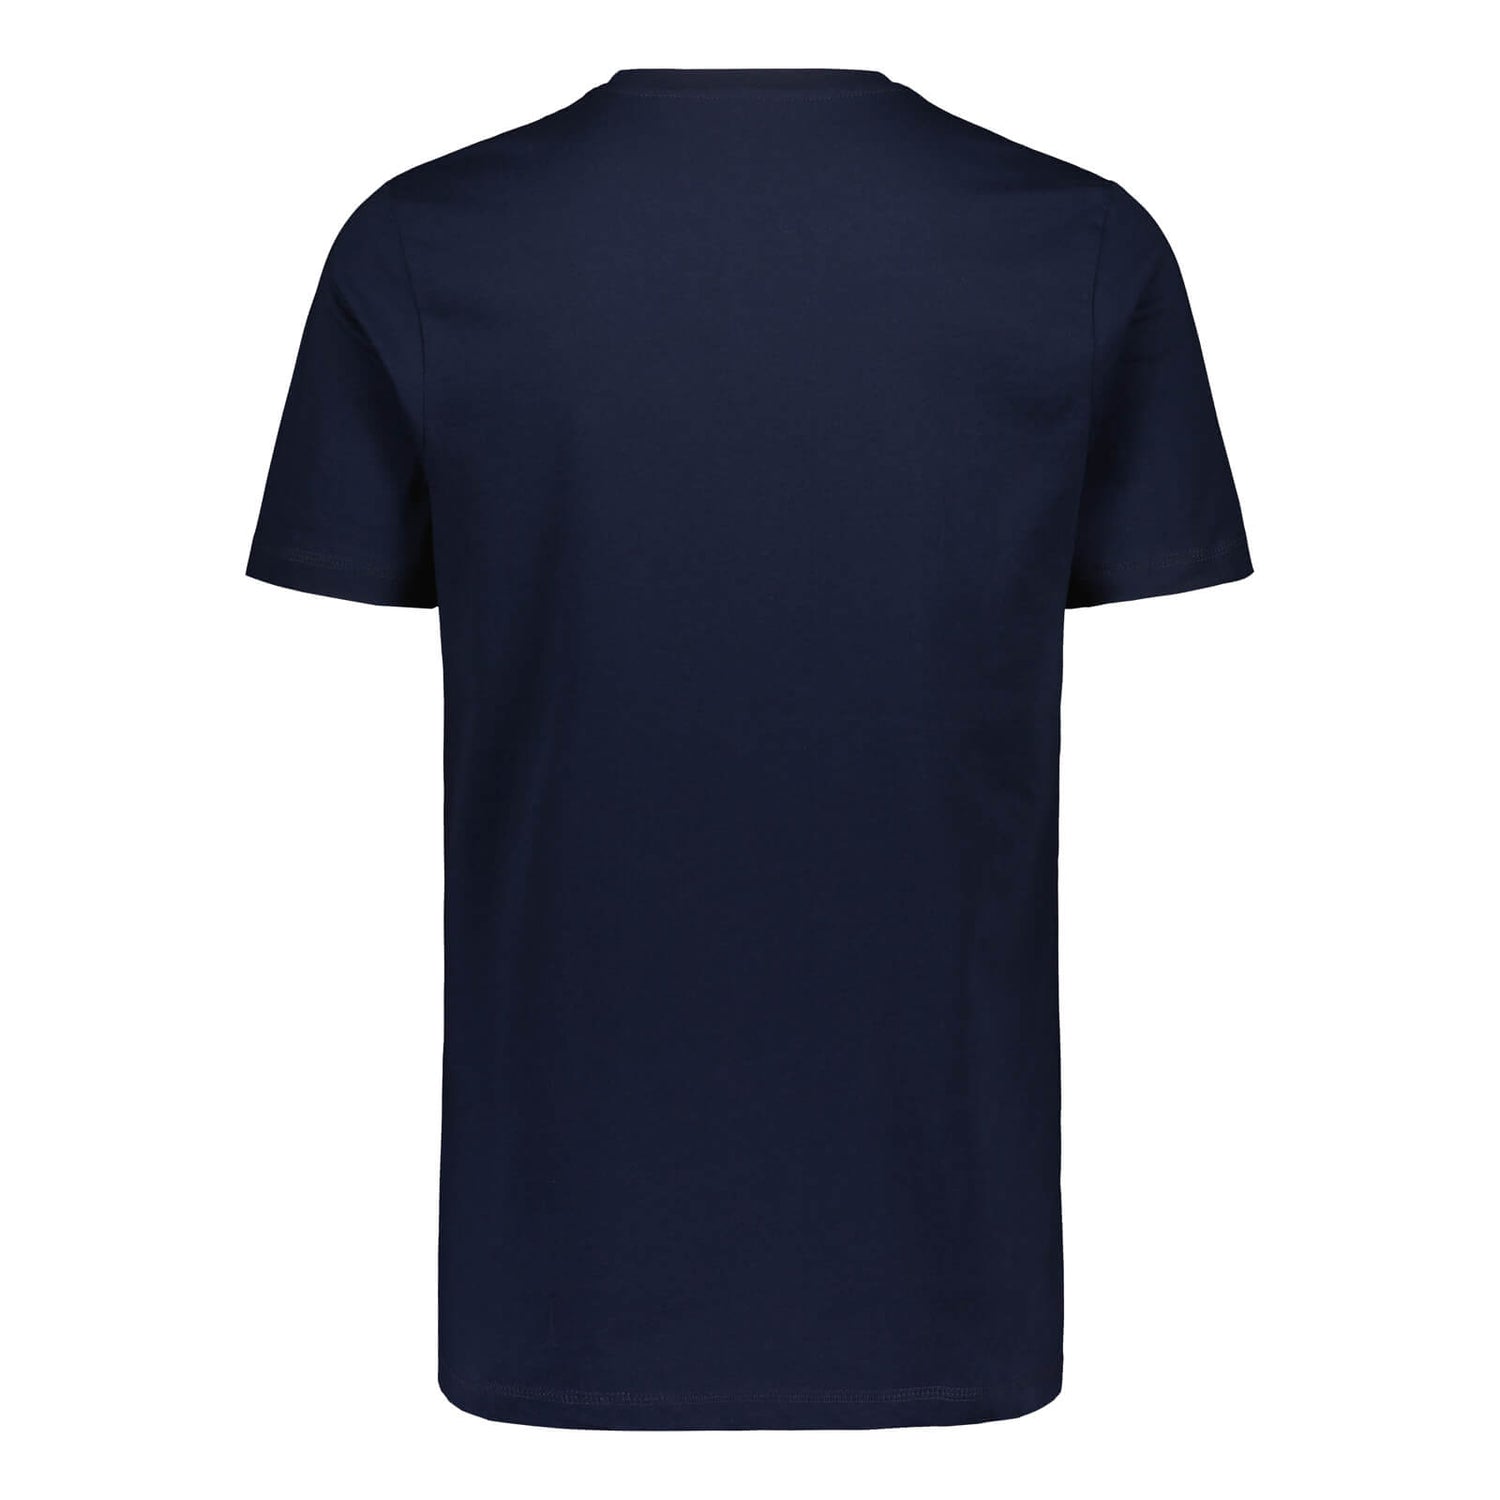 Bubi T-shirt, Navy Blue